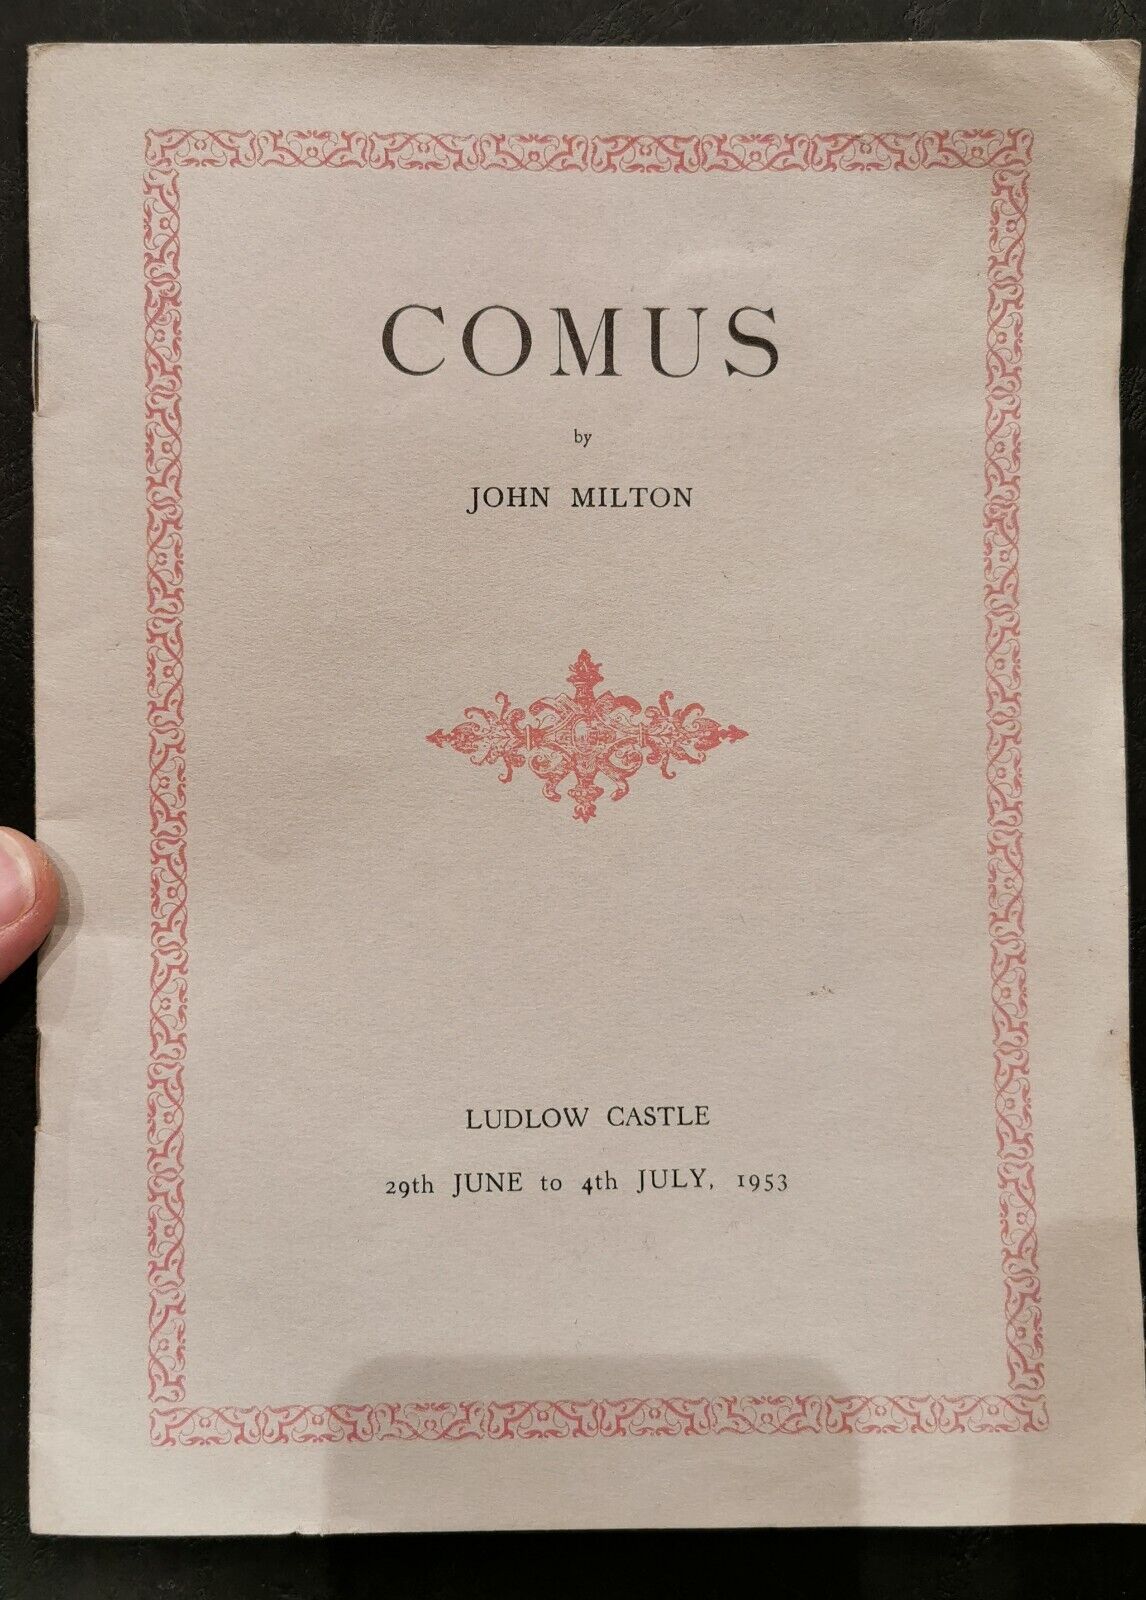 Ludlow Presents Comus at Ludlow Castle Program 1953